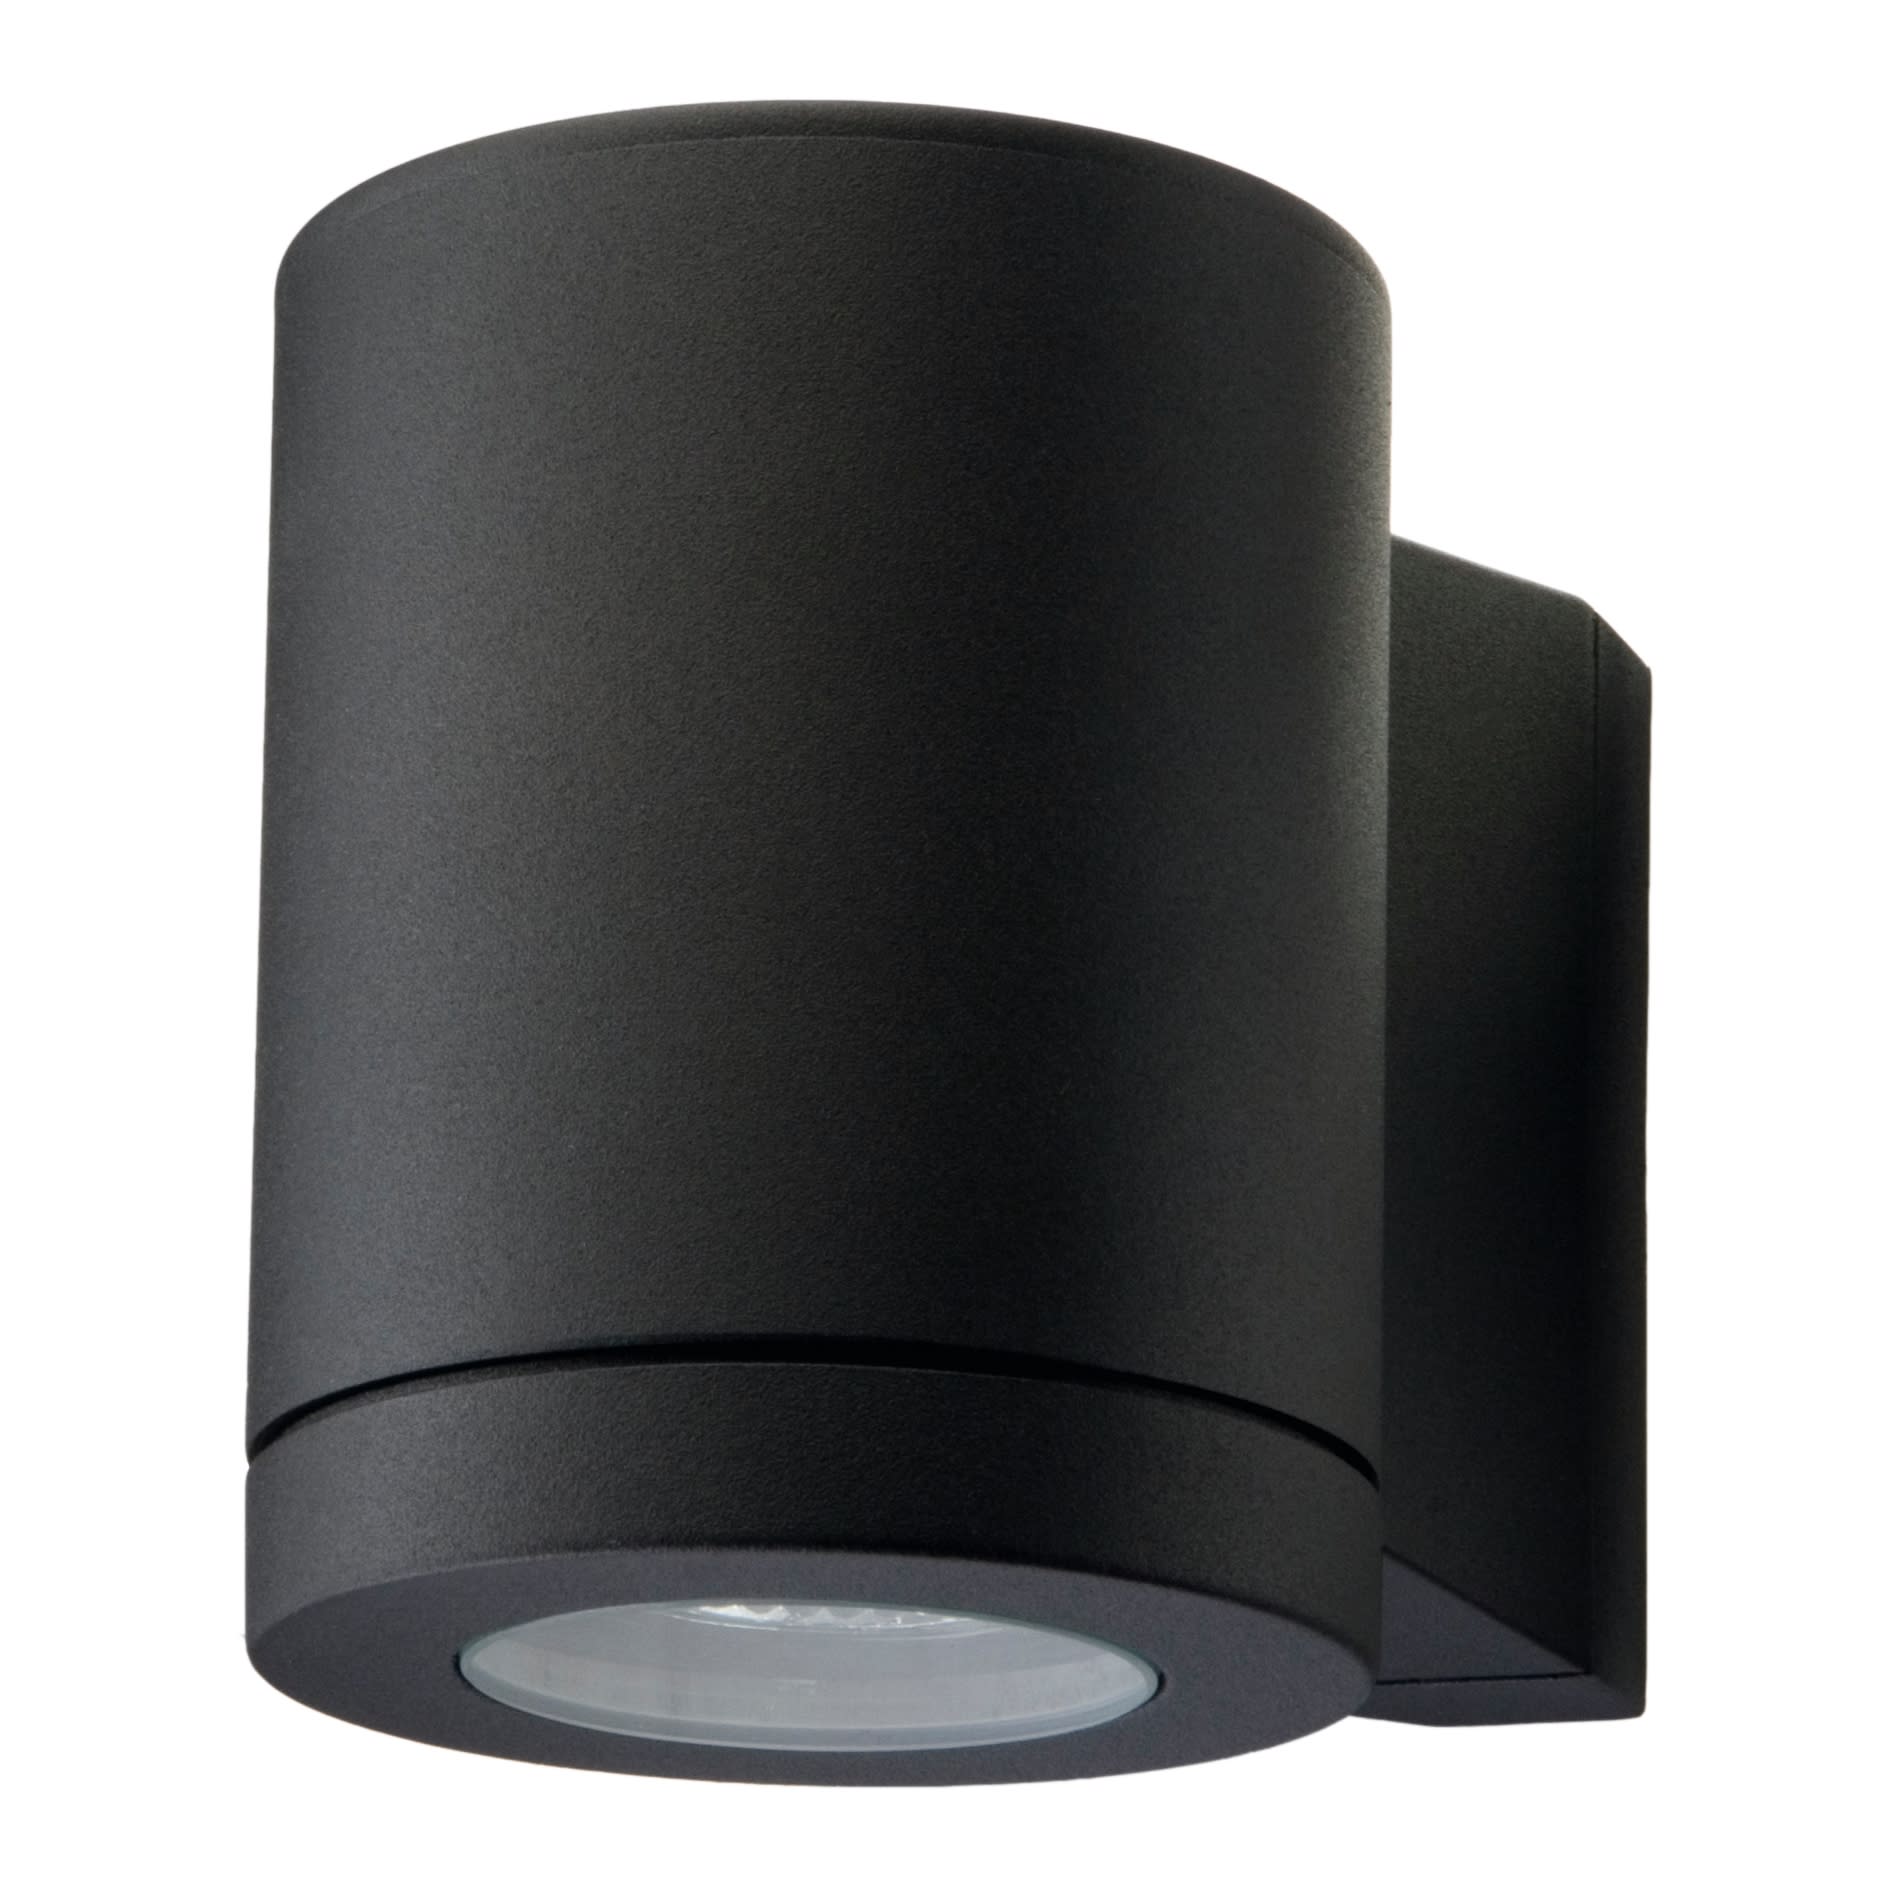 SG Lighting - Metro applique cylindrique noir 2xGU10 classe II IP65